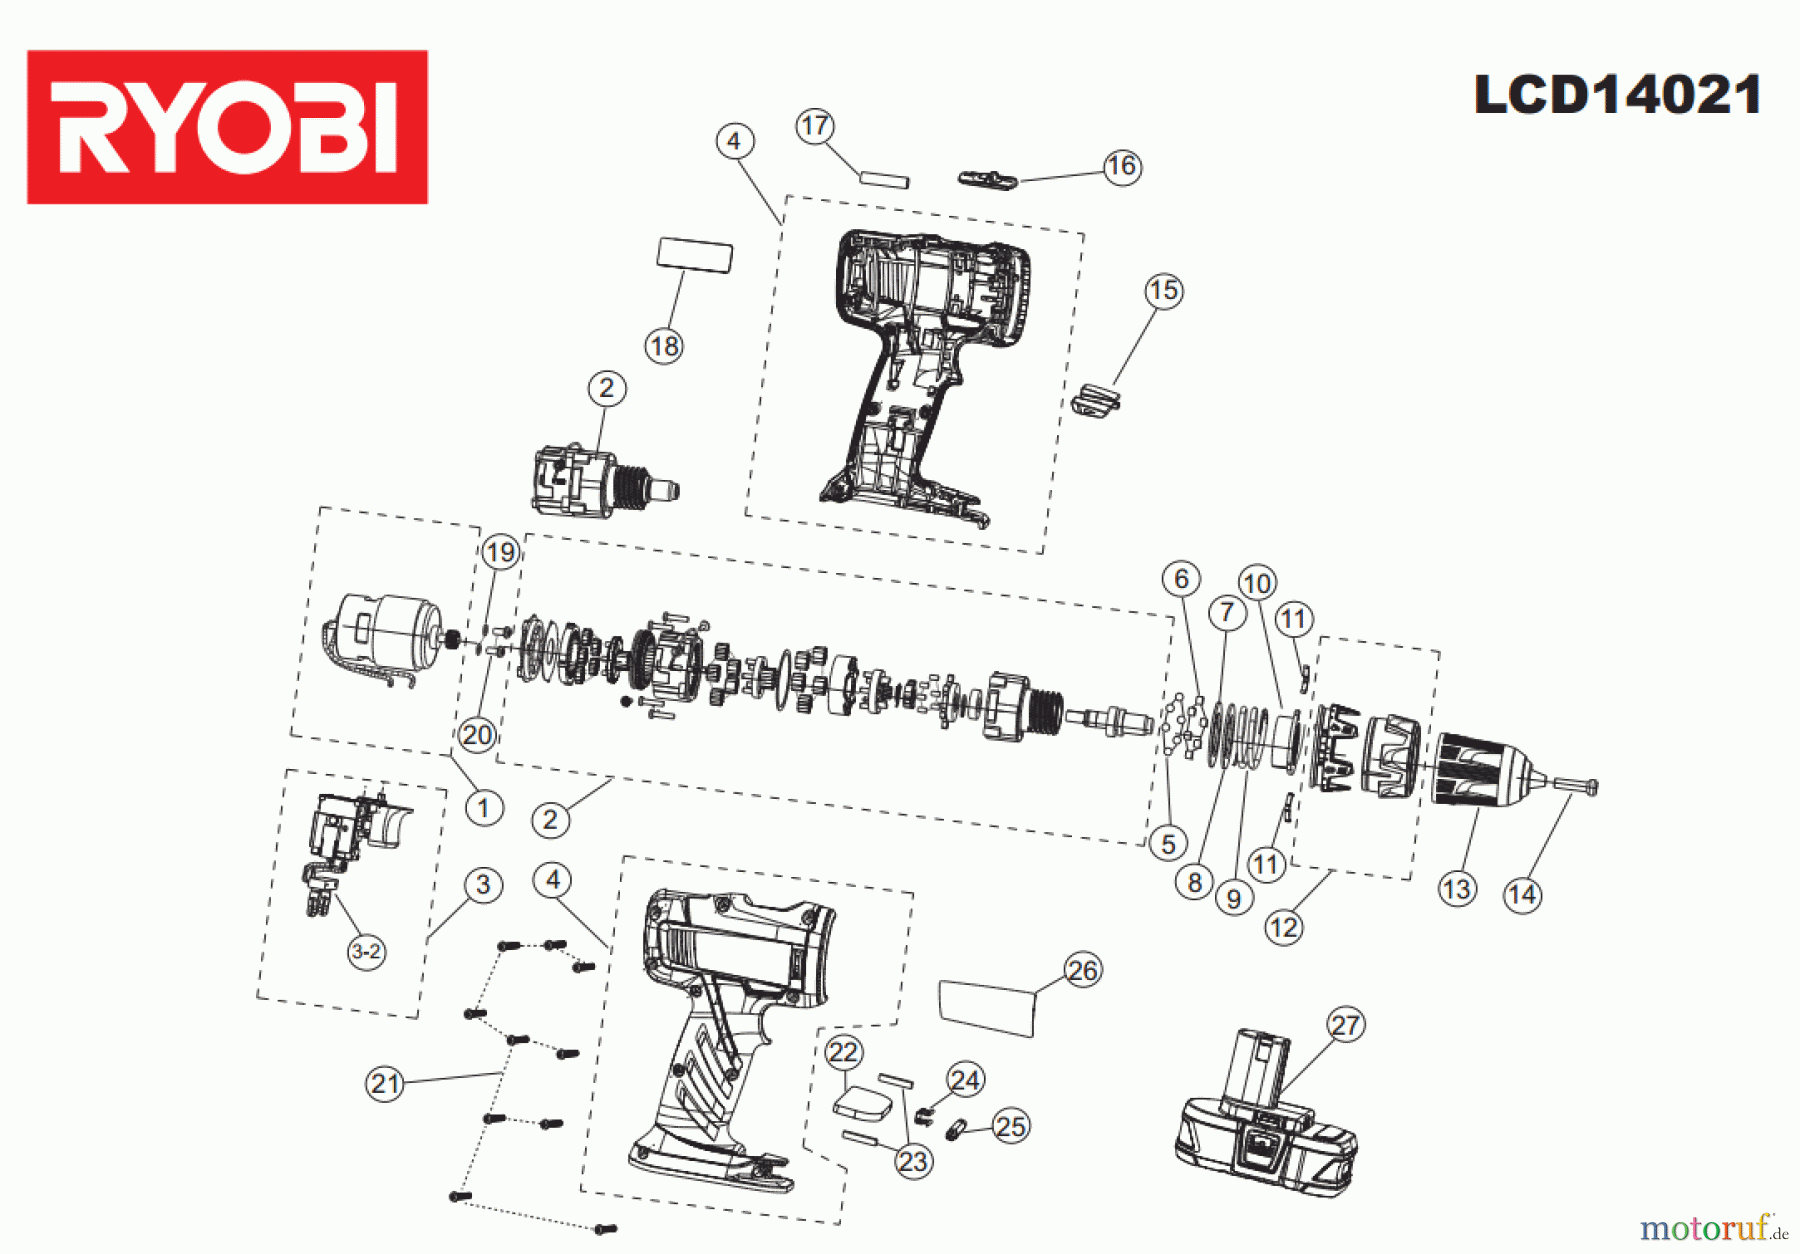  Ryobi (Schlag-)Bohrschrauber Bohrschrauber LCD14021 Seite 1